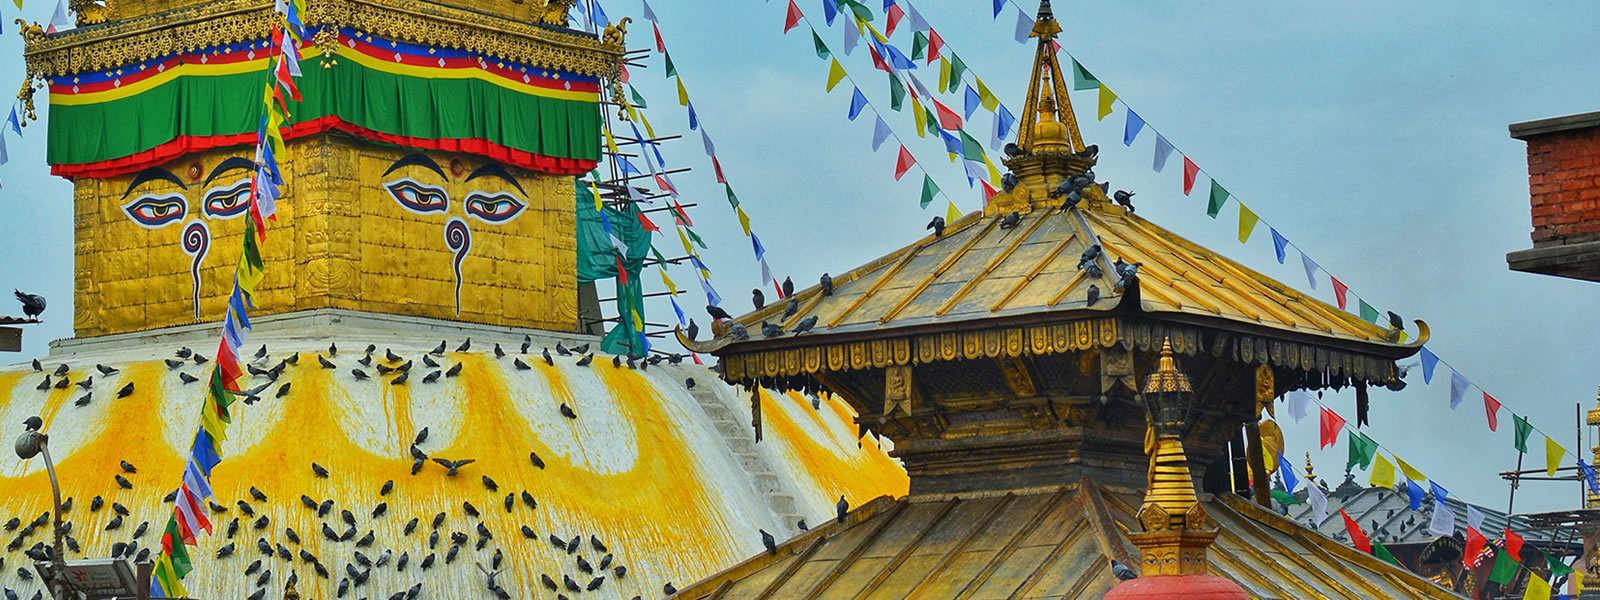 swyambhunath-stupa-world-heritage-sites-in-Nepal